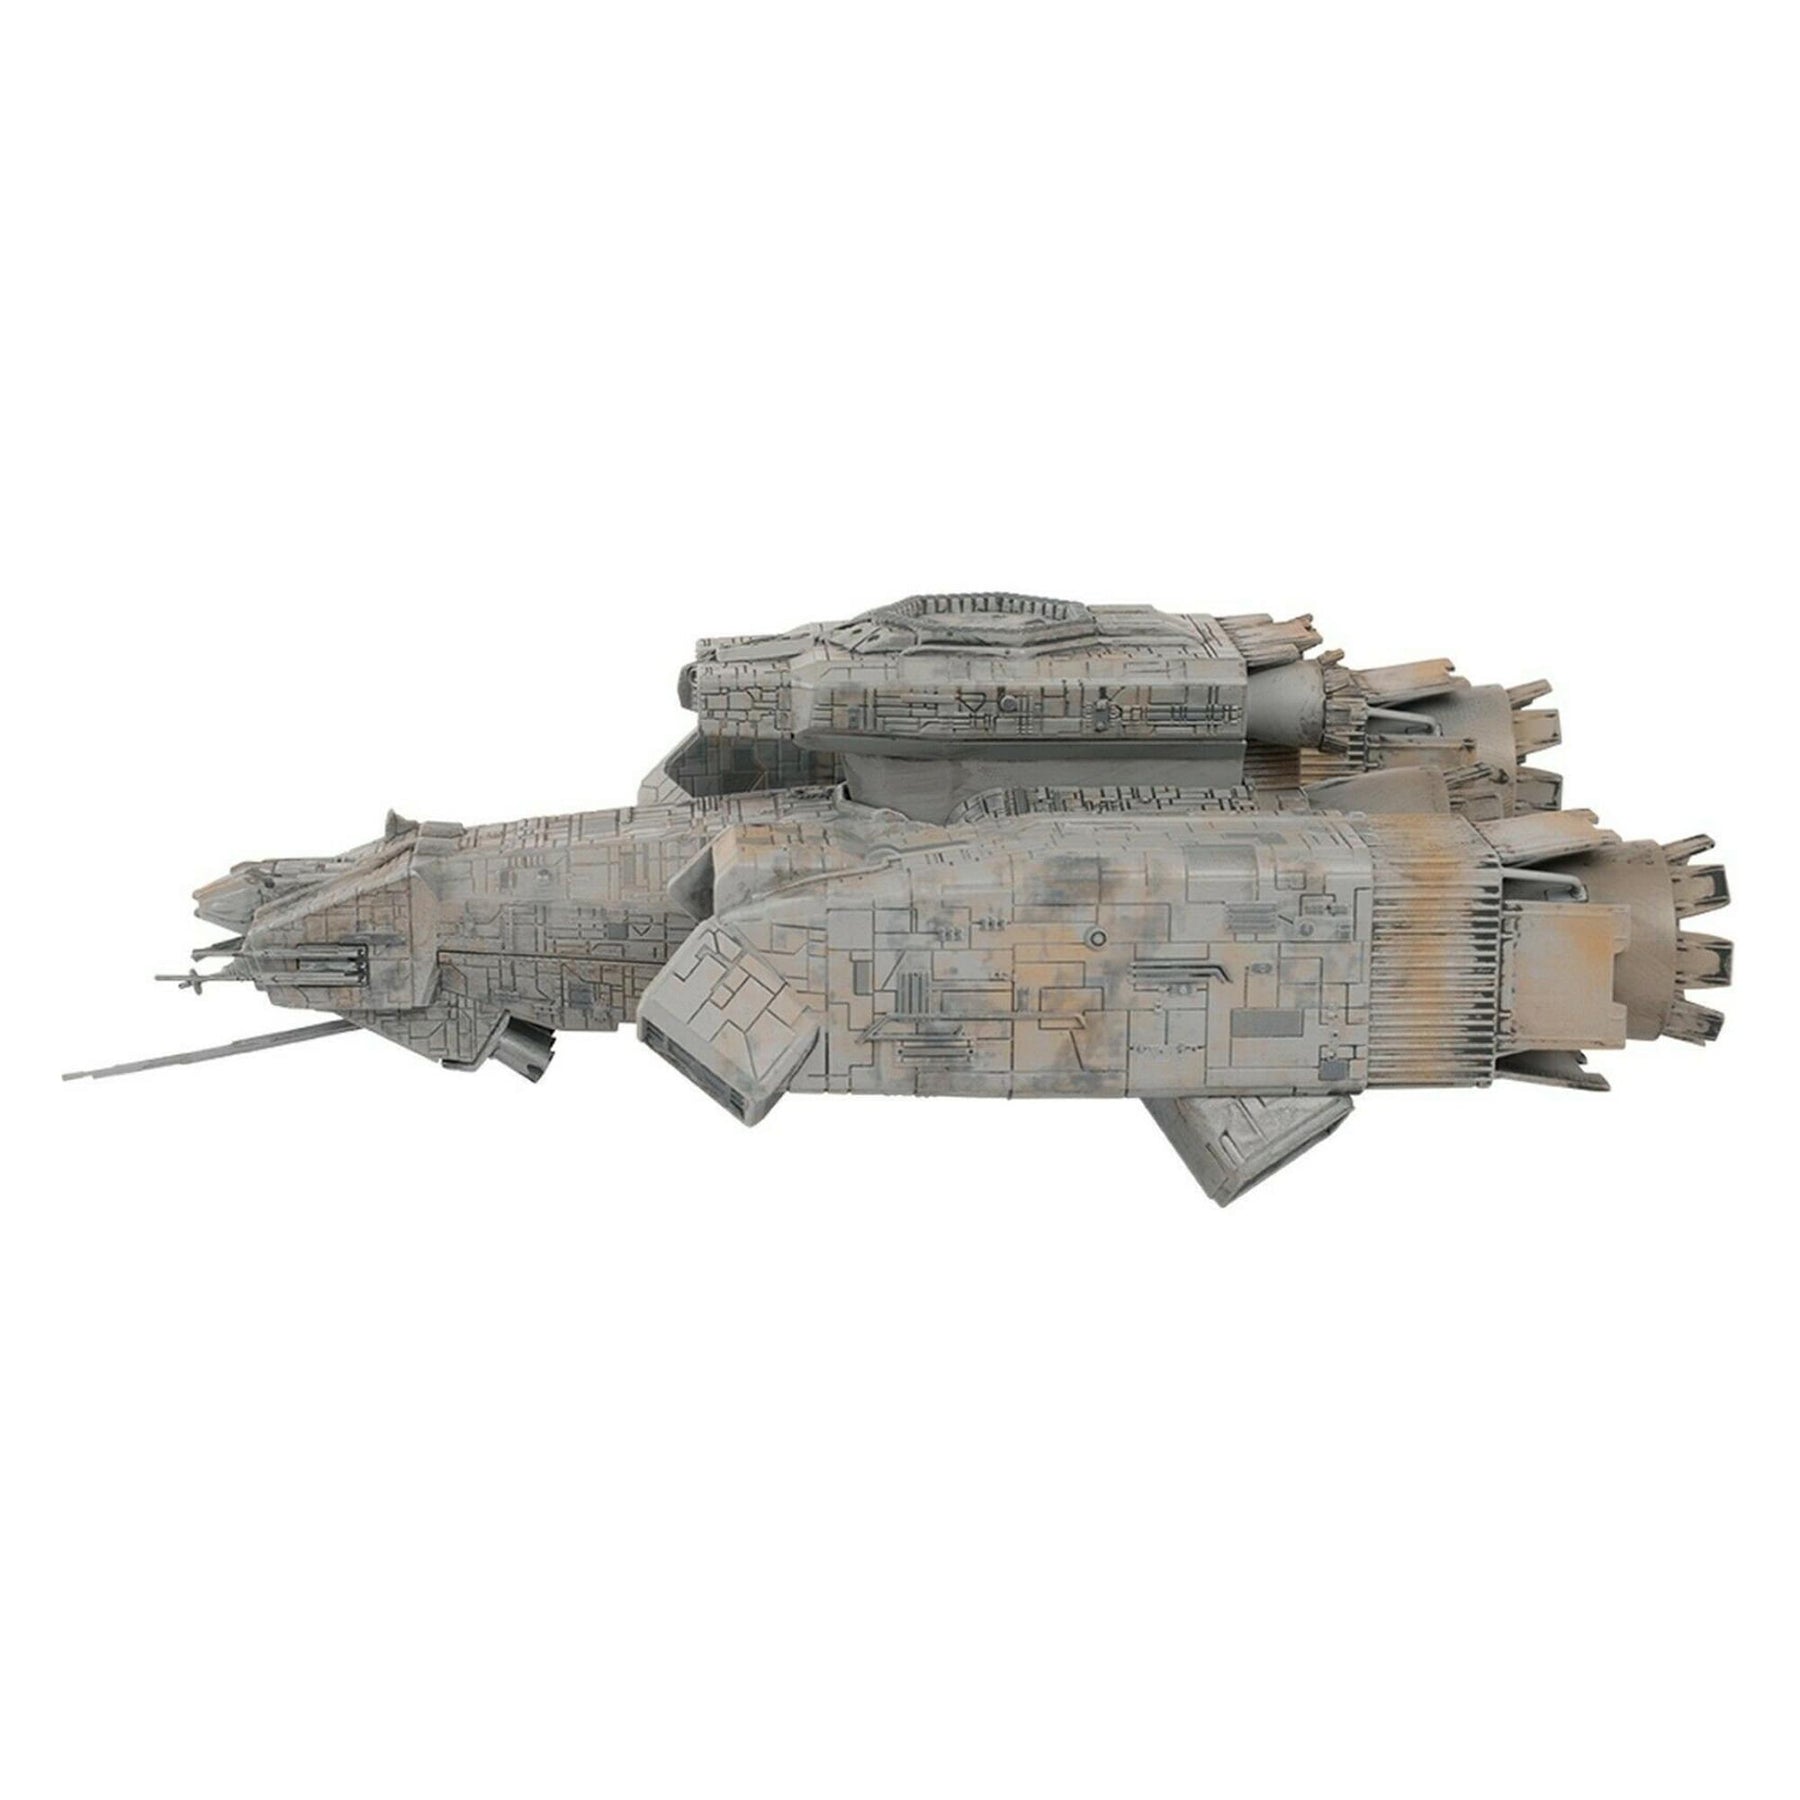 Eaglemoss Alien USCSS Nostromo Replica Ship XL Edition Brand New